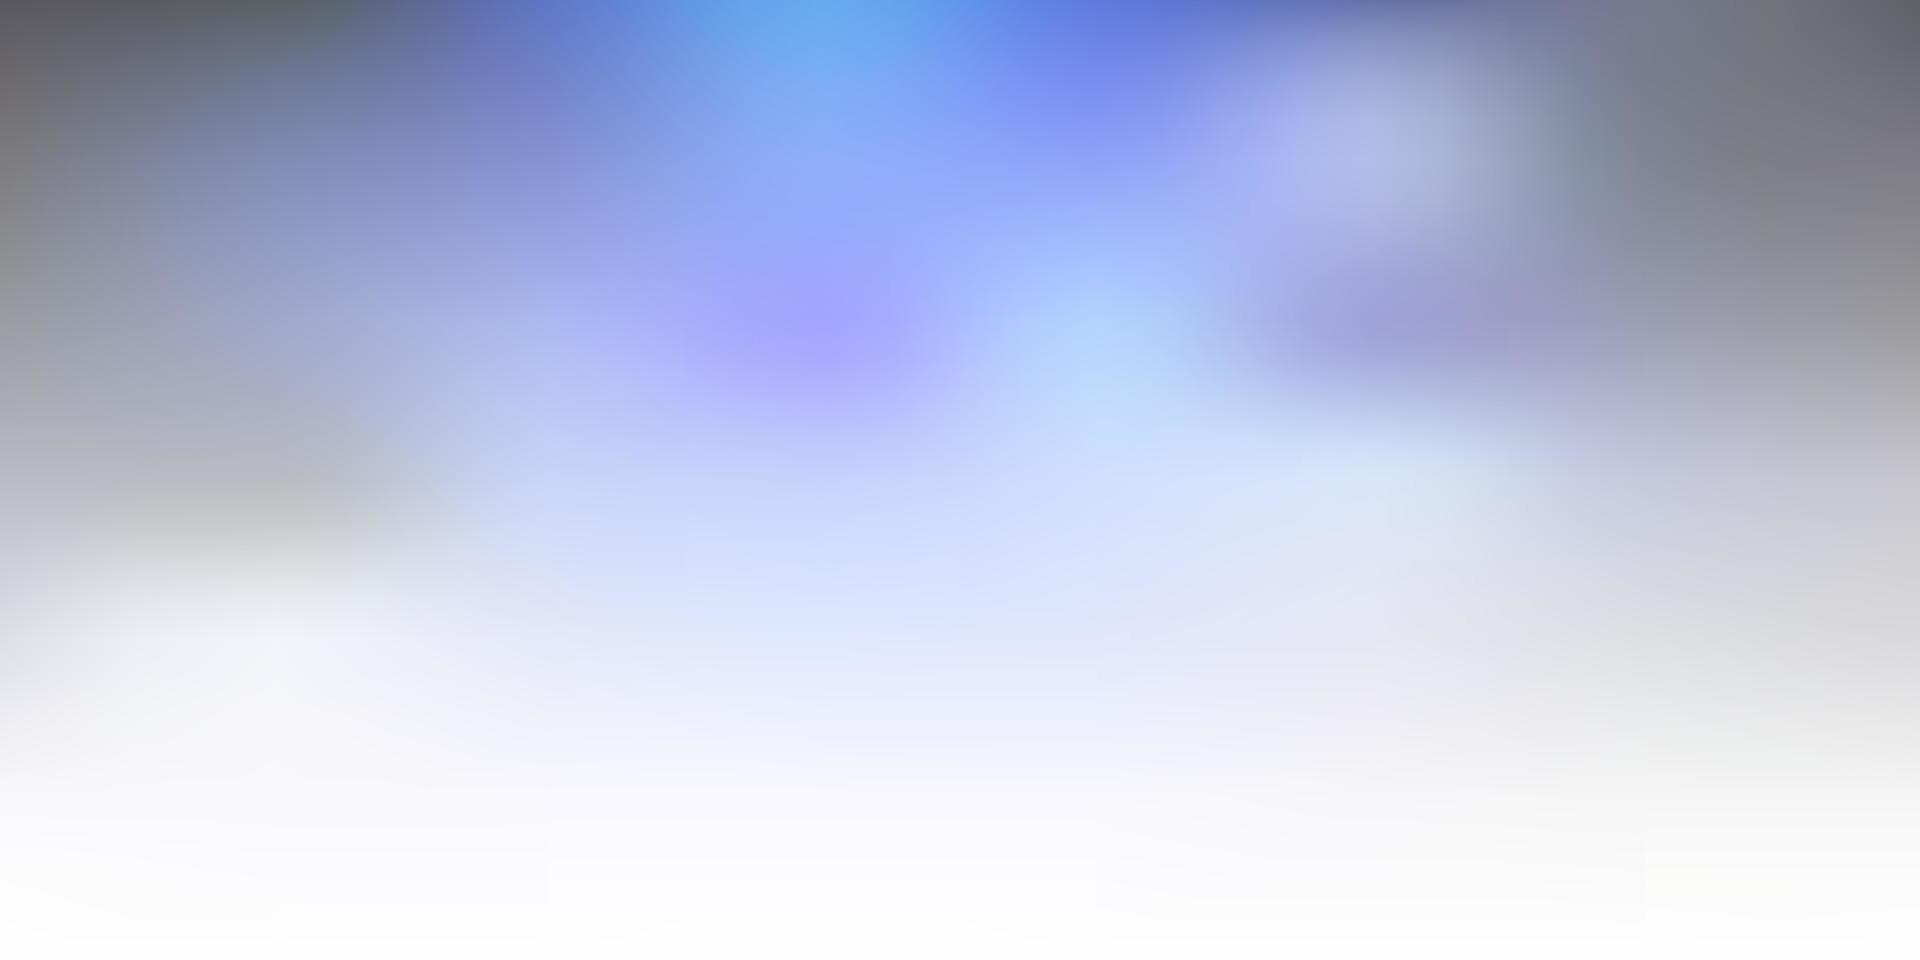 Dark blue vector abstract blur backdrop.